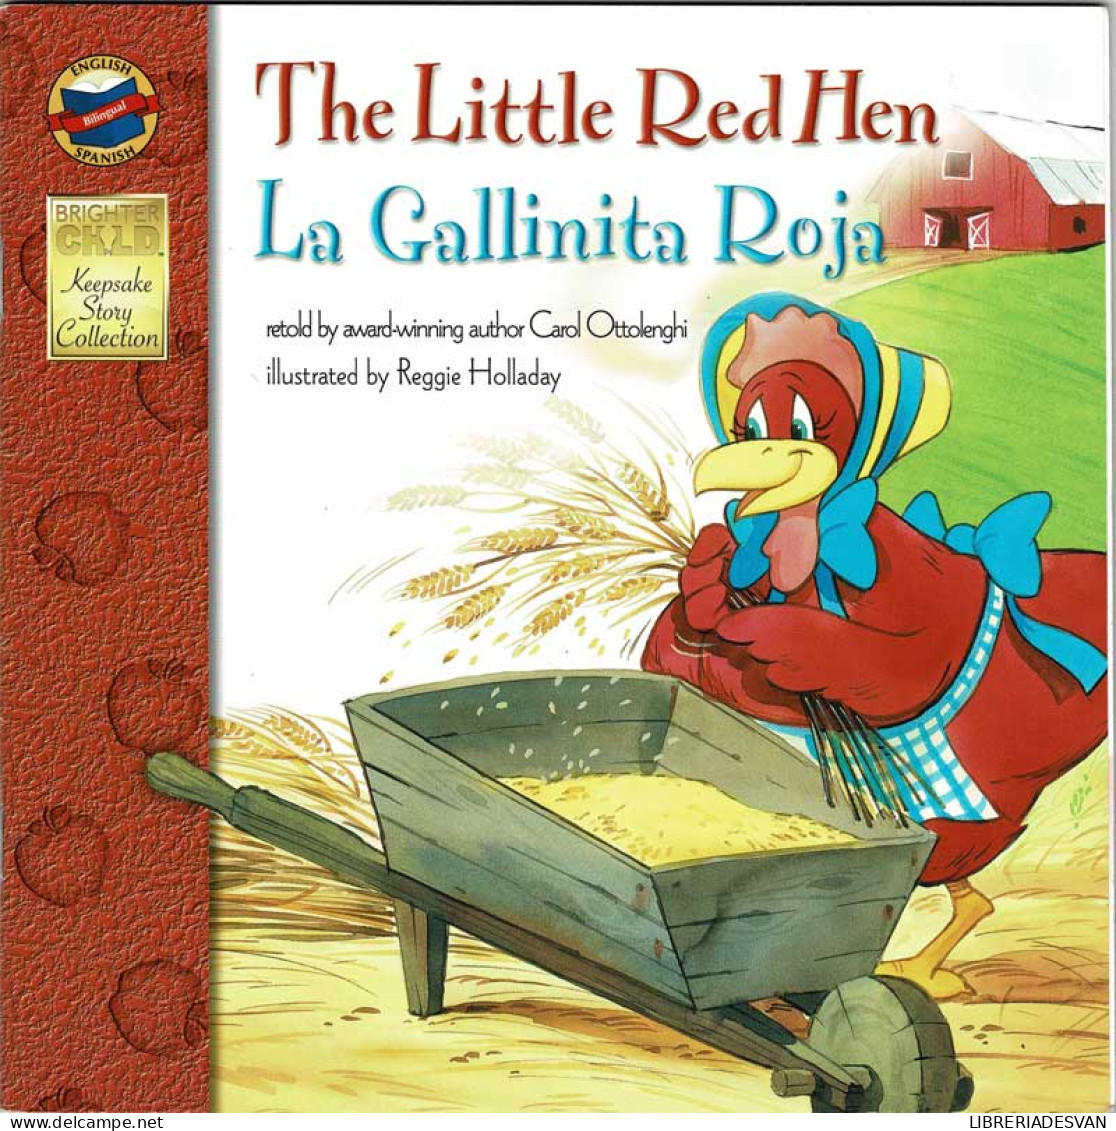 The Little Red Hen / La Gallinita Roja - Carol Ottolenghi & Reggie Holladay - Children's